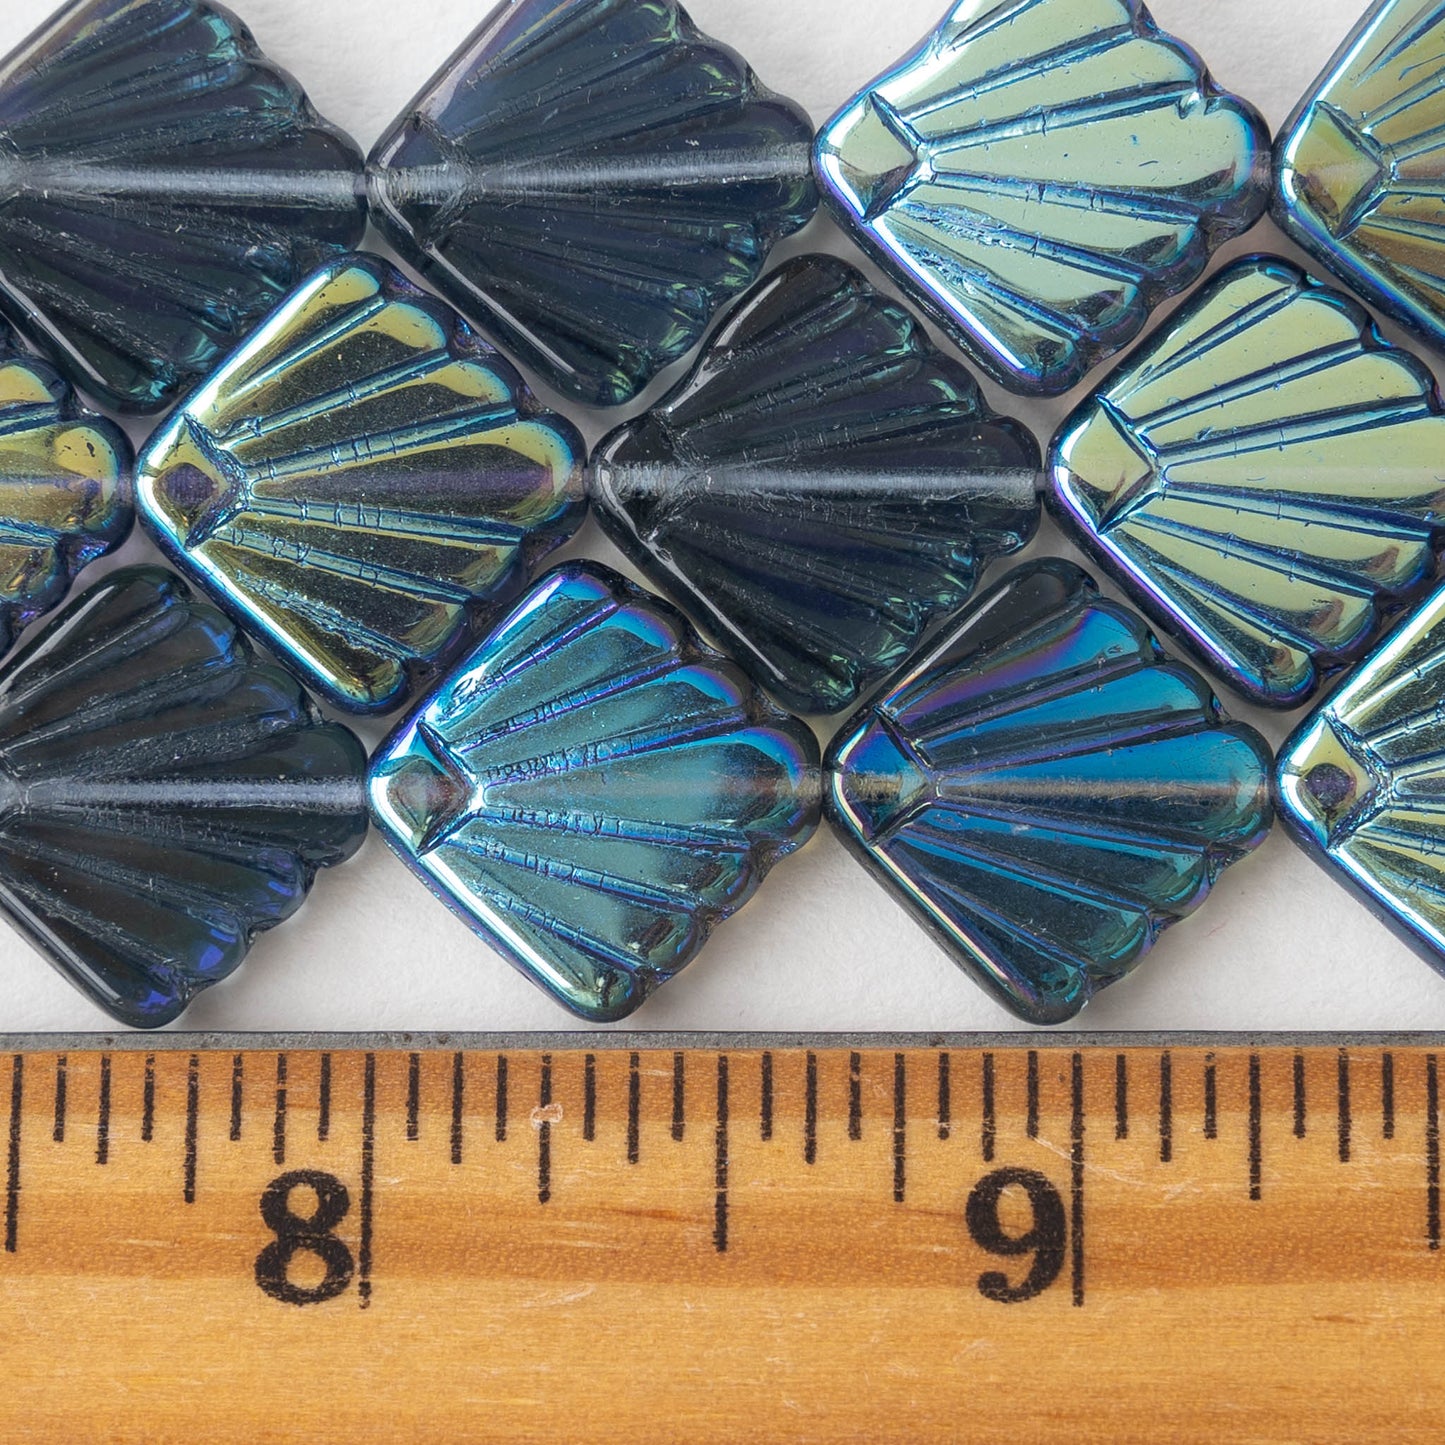 14mm Diafan Beads - Montana Blue with Blue Iris  - 8 beads